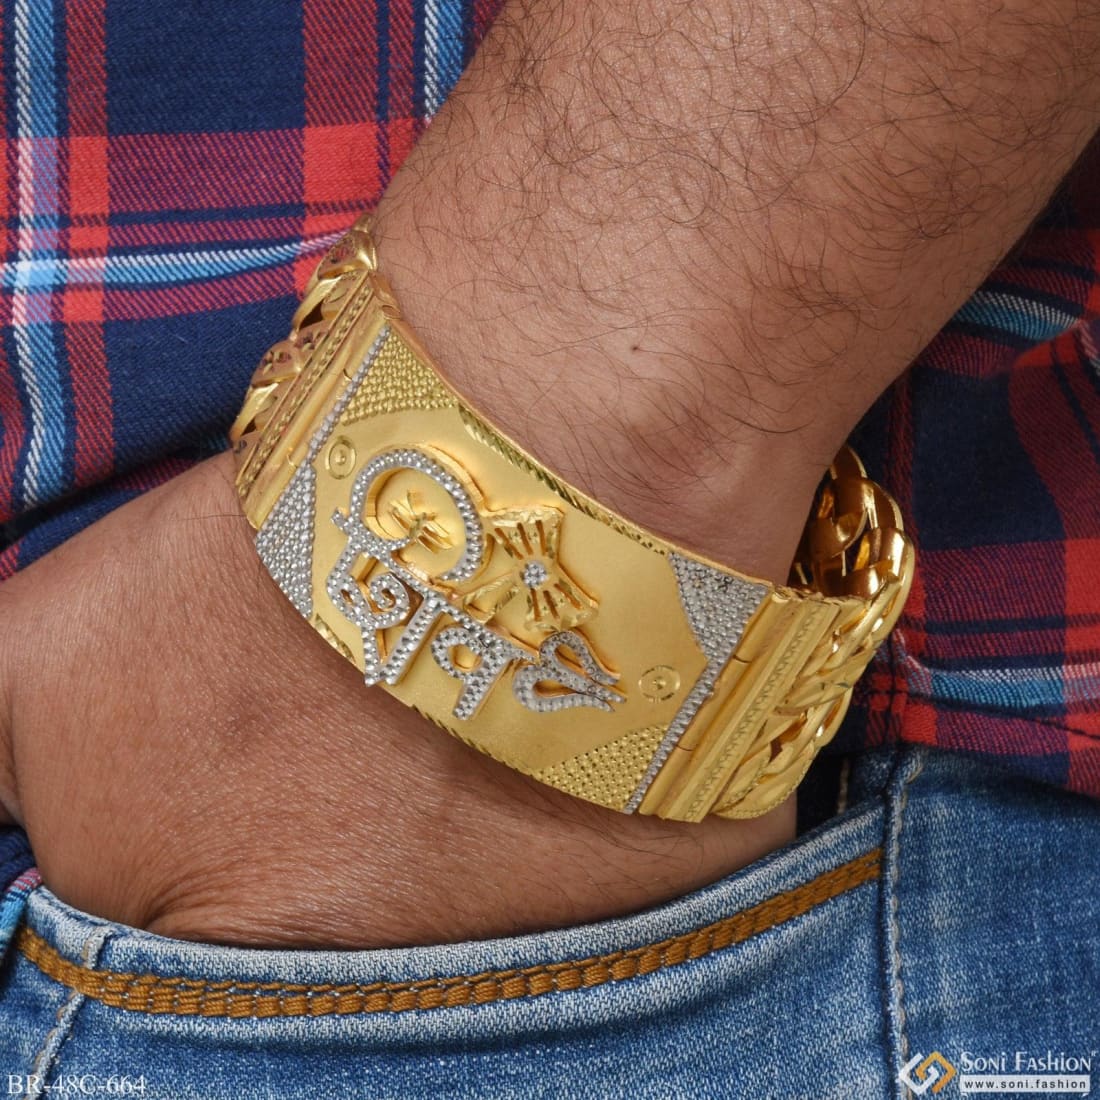 1 gram gold plated shiv decorative design best quality bracelet style c664 soni fashion